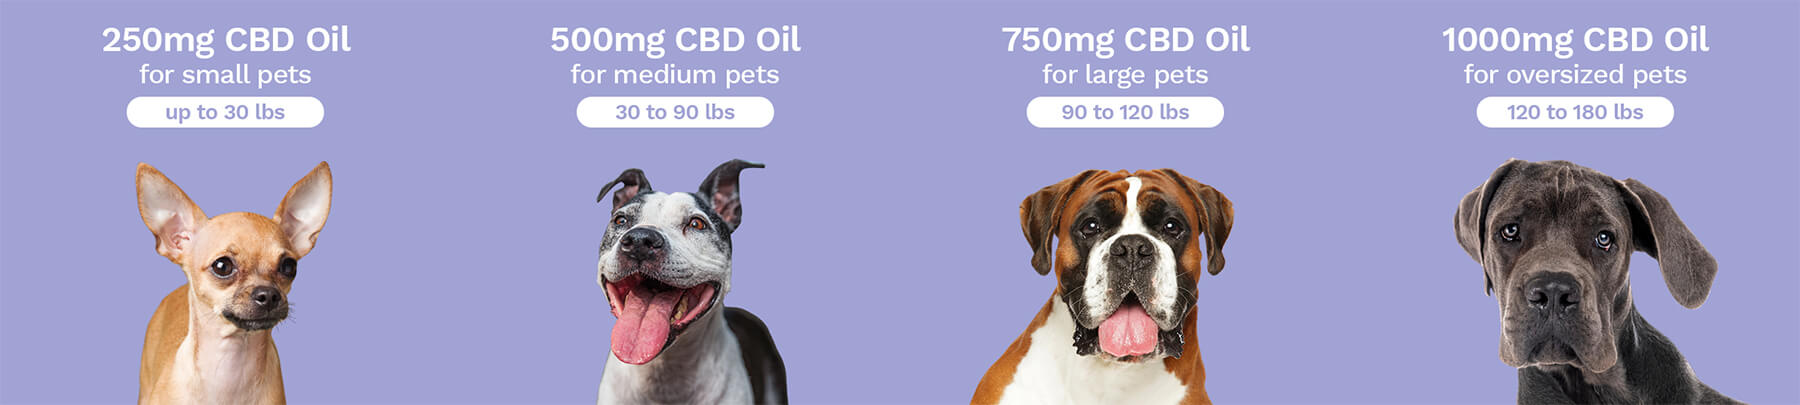 Penelope's Bloom Peanut Butter Flavor CBD Oil For Dogs Dosing Chart